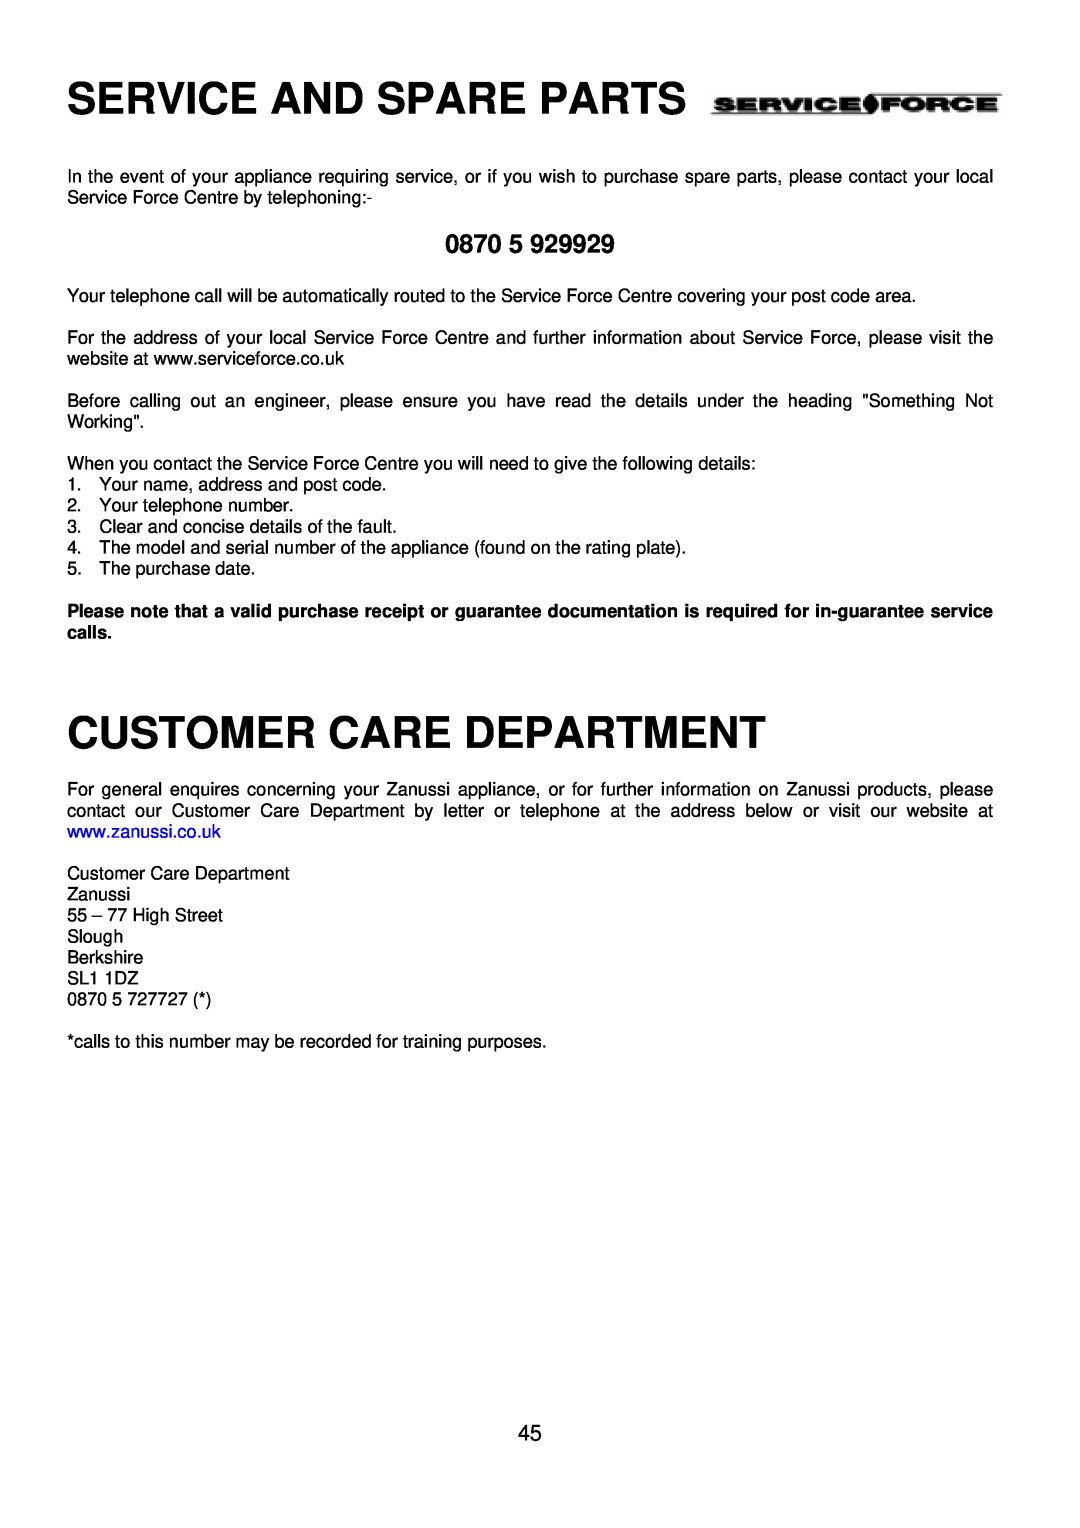 Zanussi ZDQ 895 manual 0870, Service And Spare Parts, Customer Care Department 